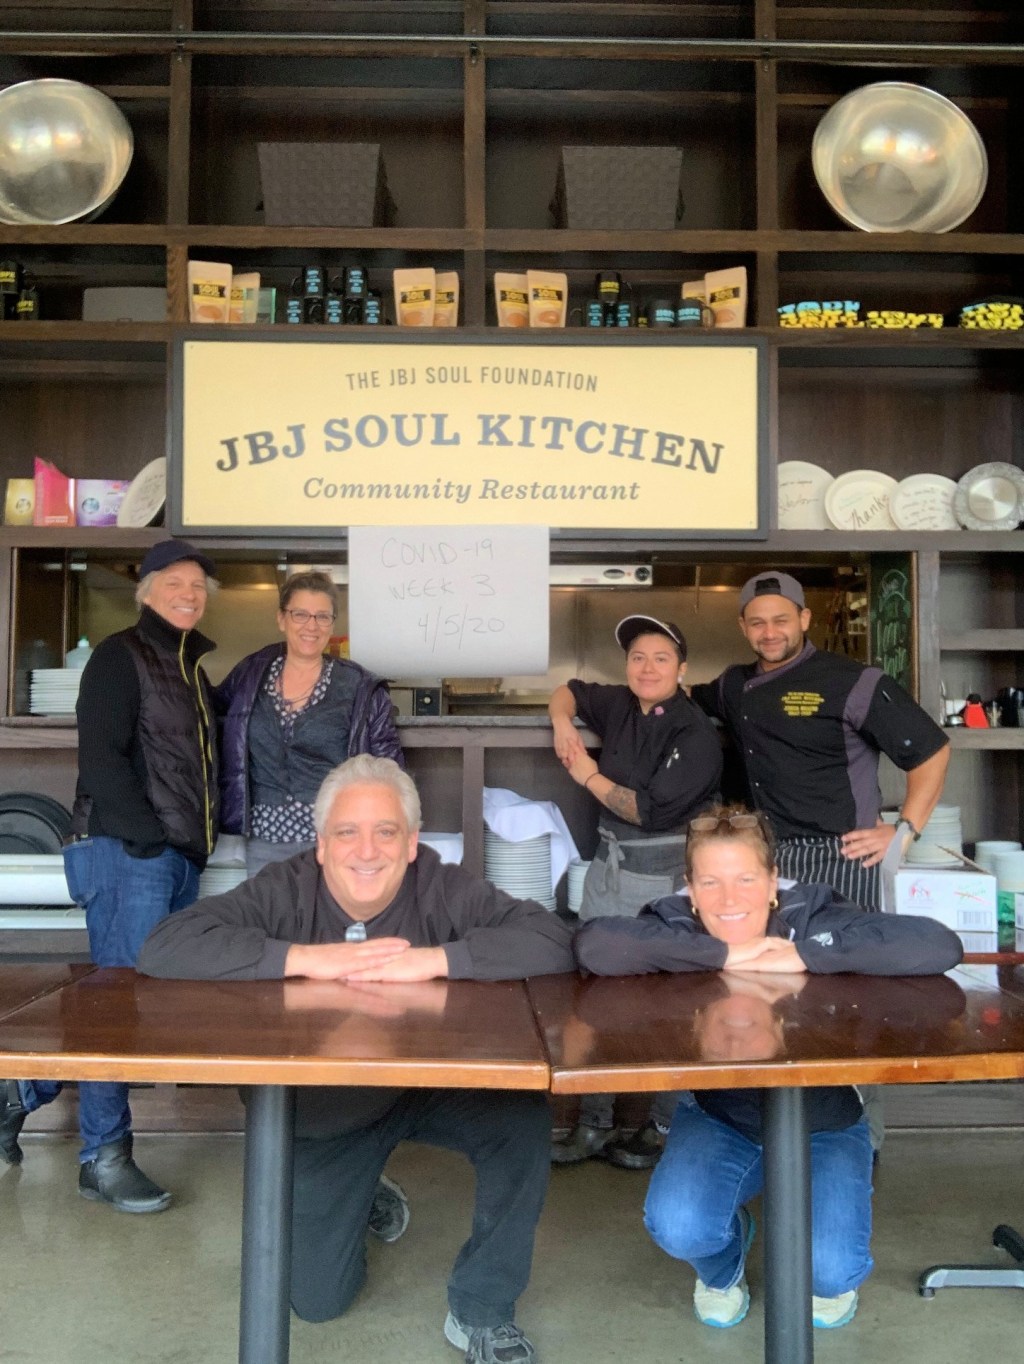 Jon Bon Jovi and the team at the JBJ Soul Kitchen